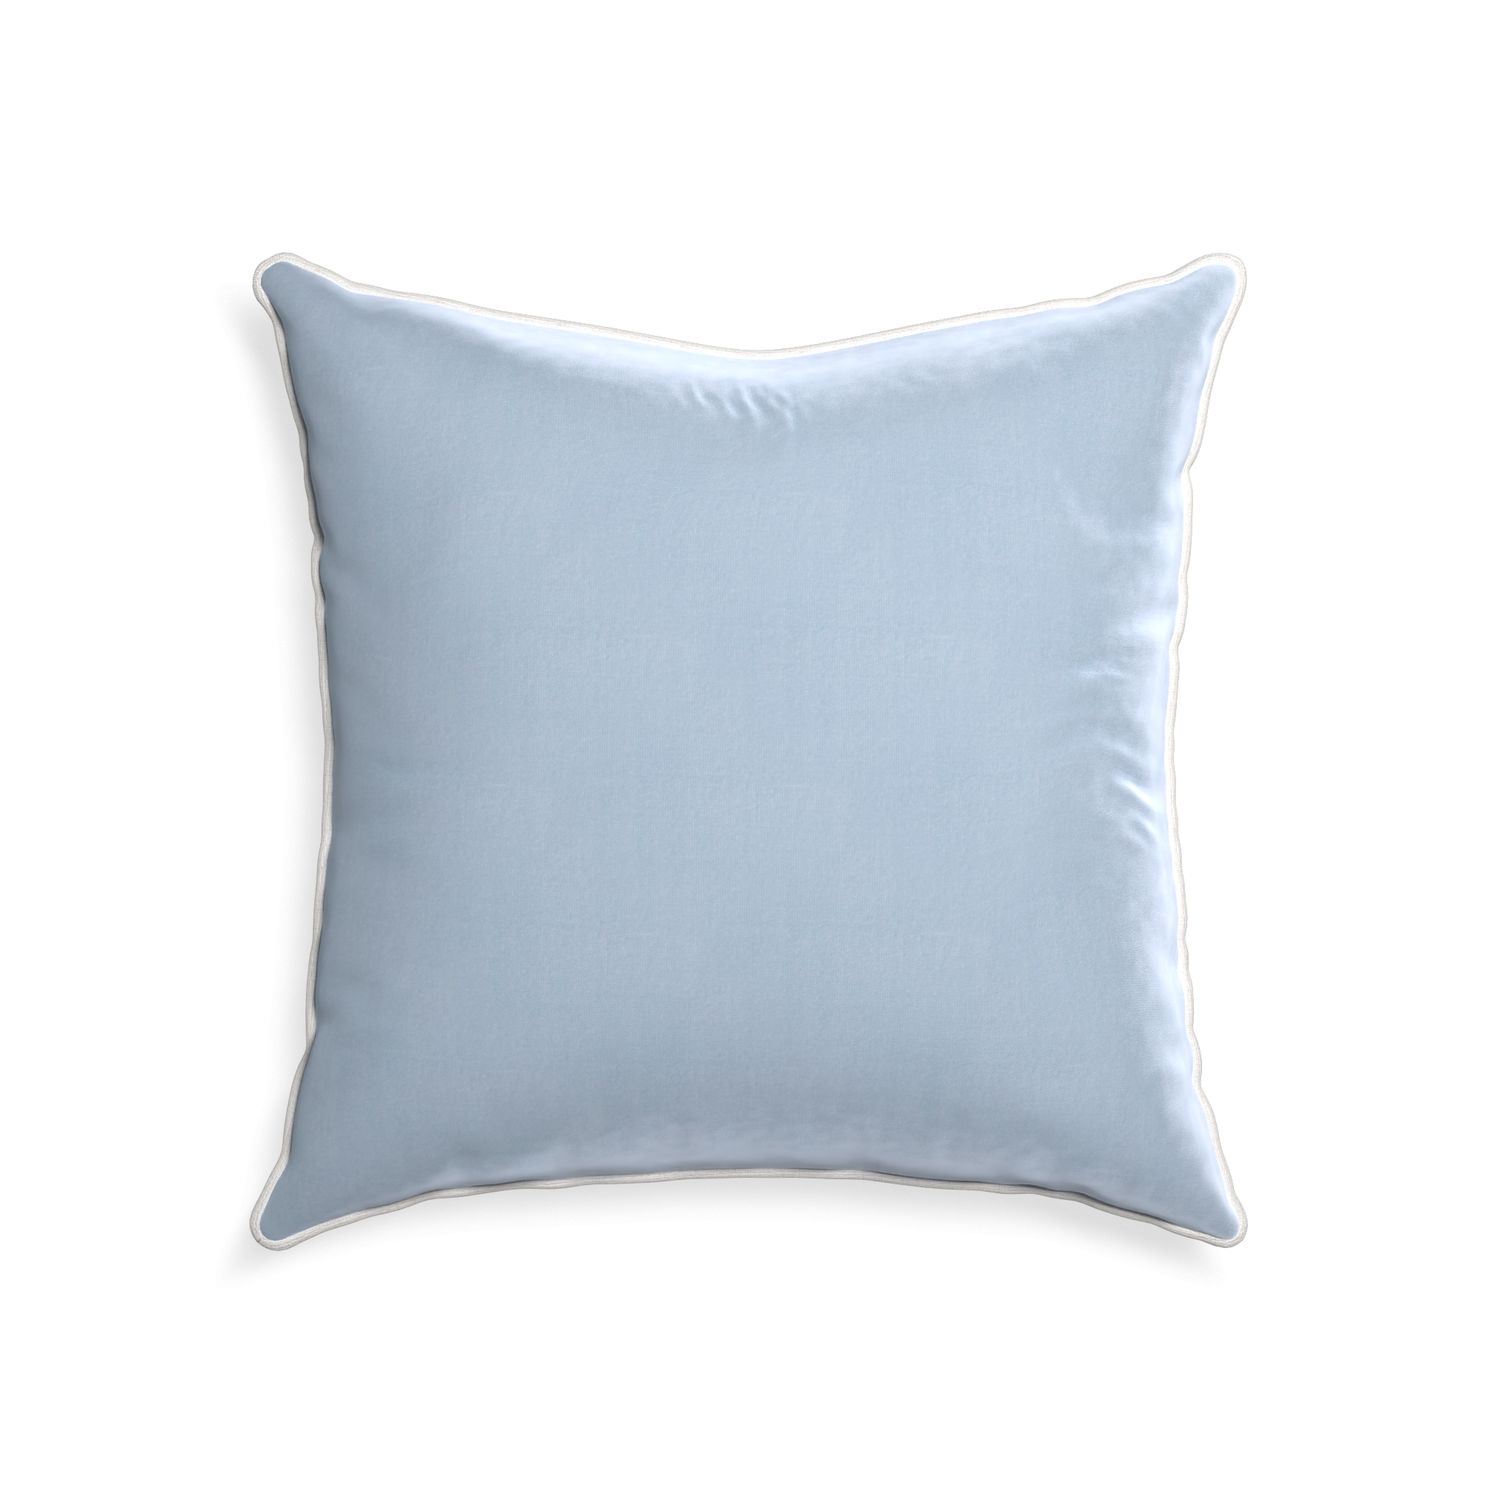 square light blue velvet pillow with white piping